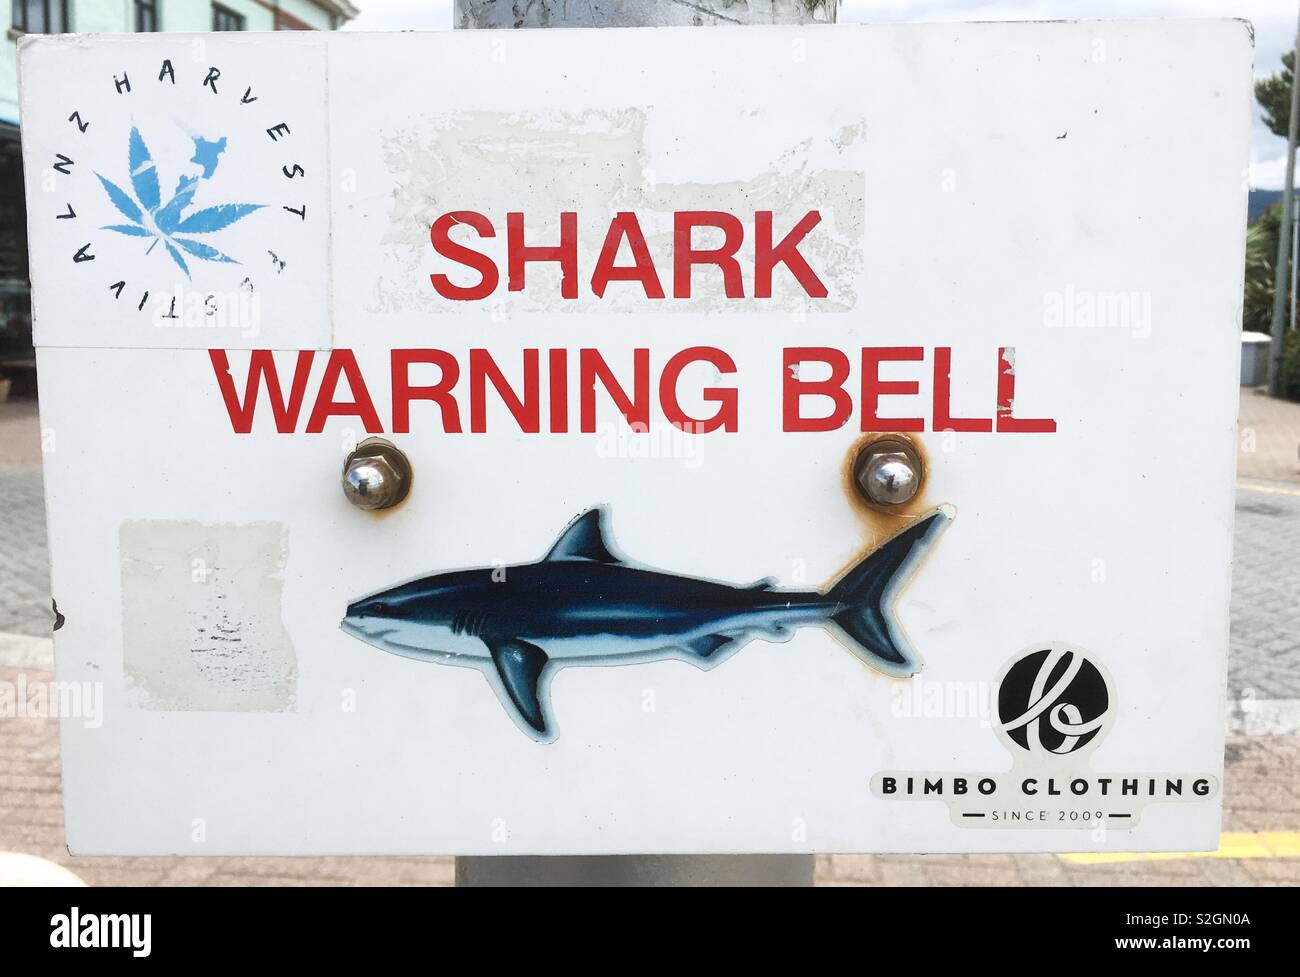 Shark warning bell sign on post holding hand bell at St Clair’s beach, Dunedin, New Zealand. Stock Photo